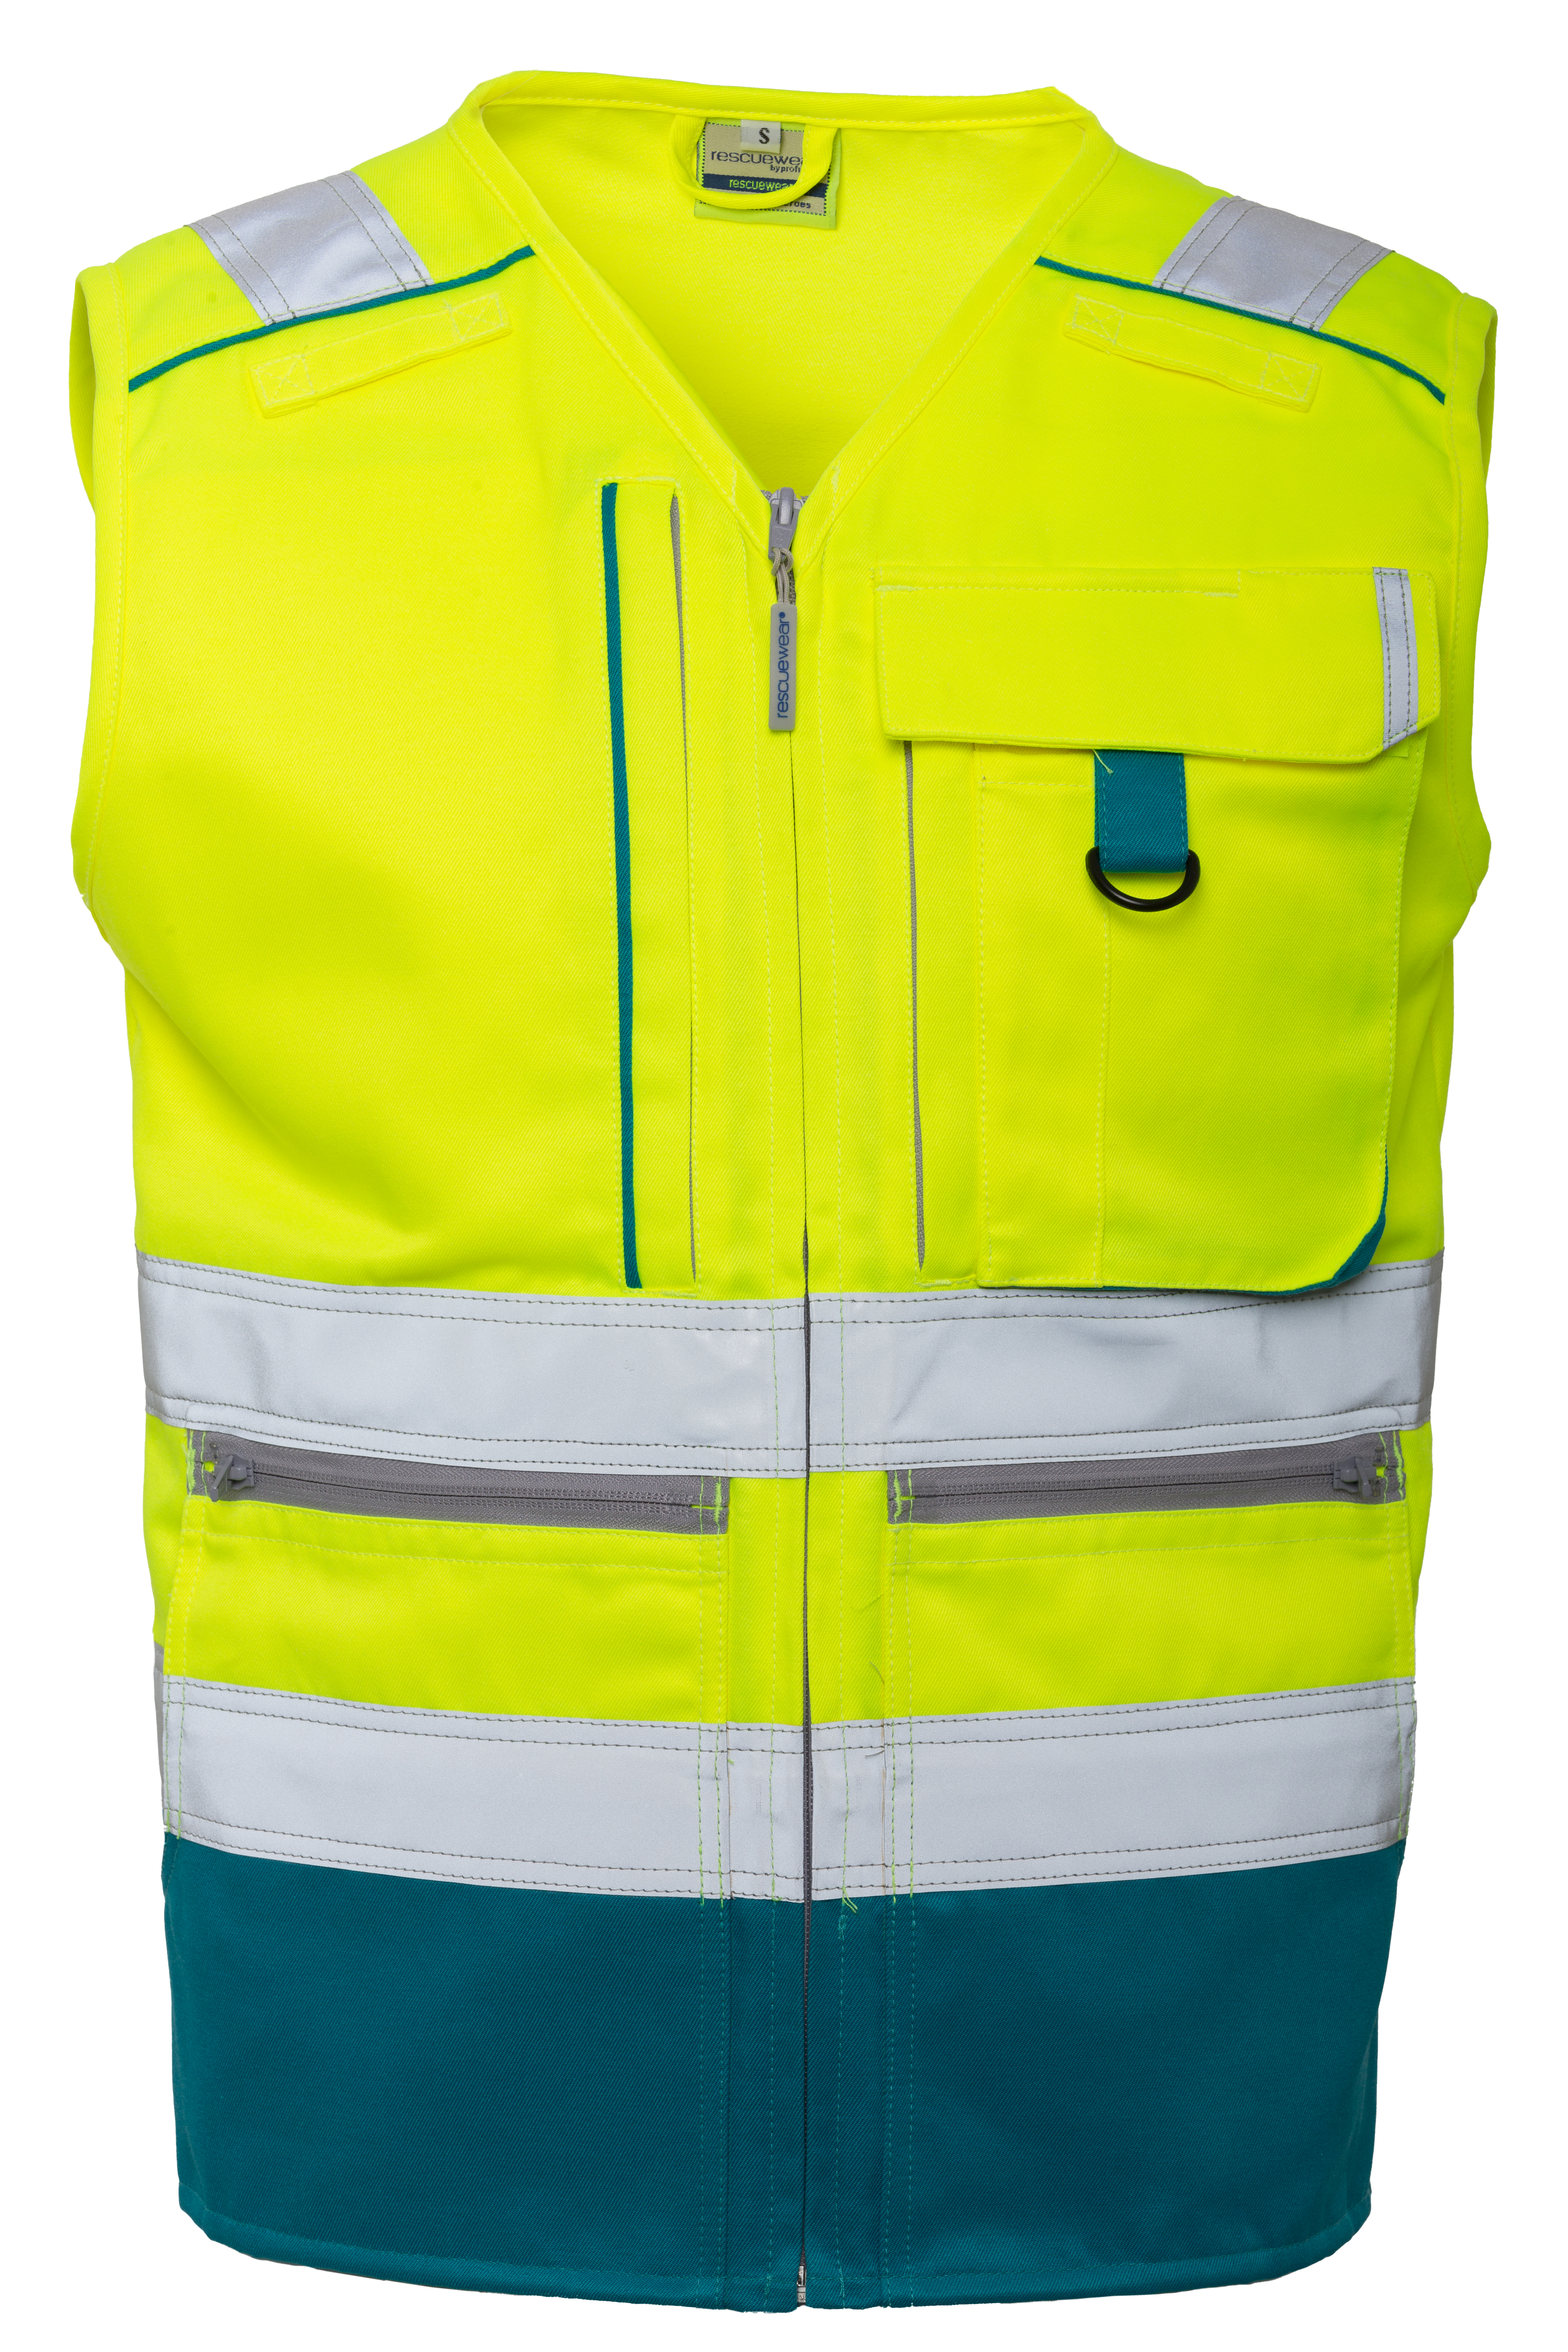 Rescuewear Sommerweste 33659 Dynamic HiVis Klasse 1 Enamelblau / Neon Gelb